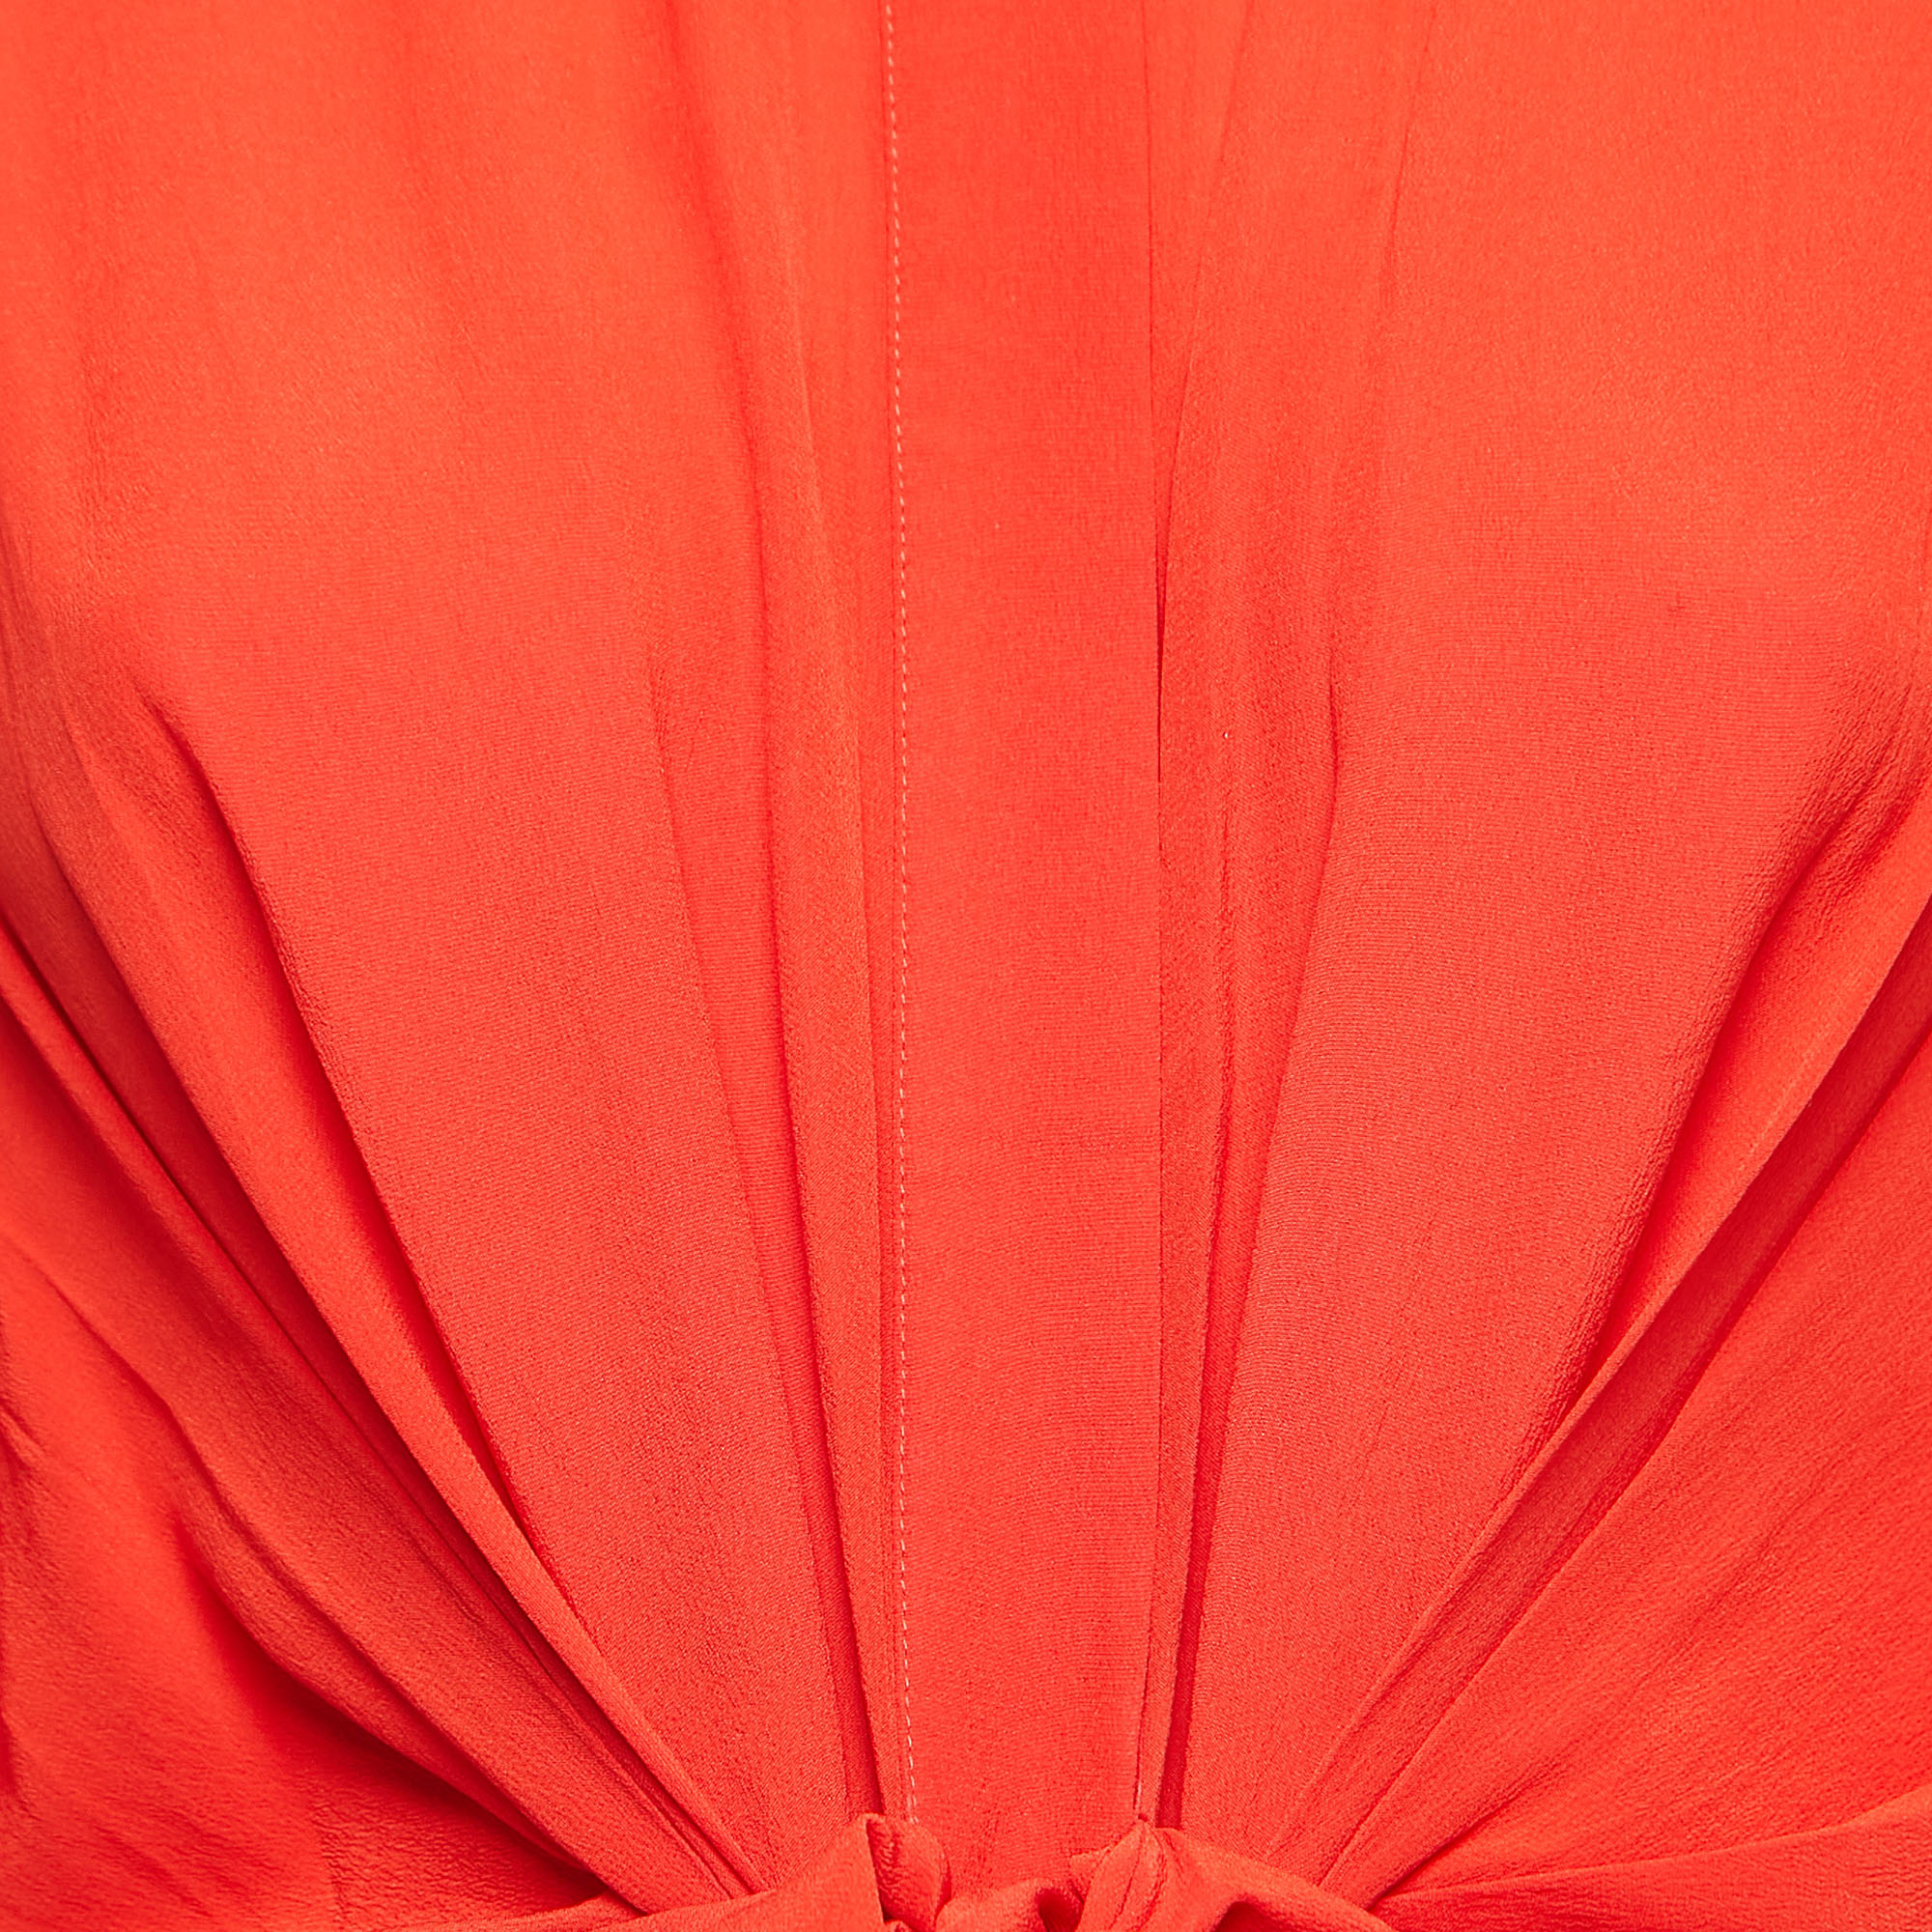 Victoria Beckham Orange Silk Draped Midi Dress S